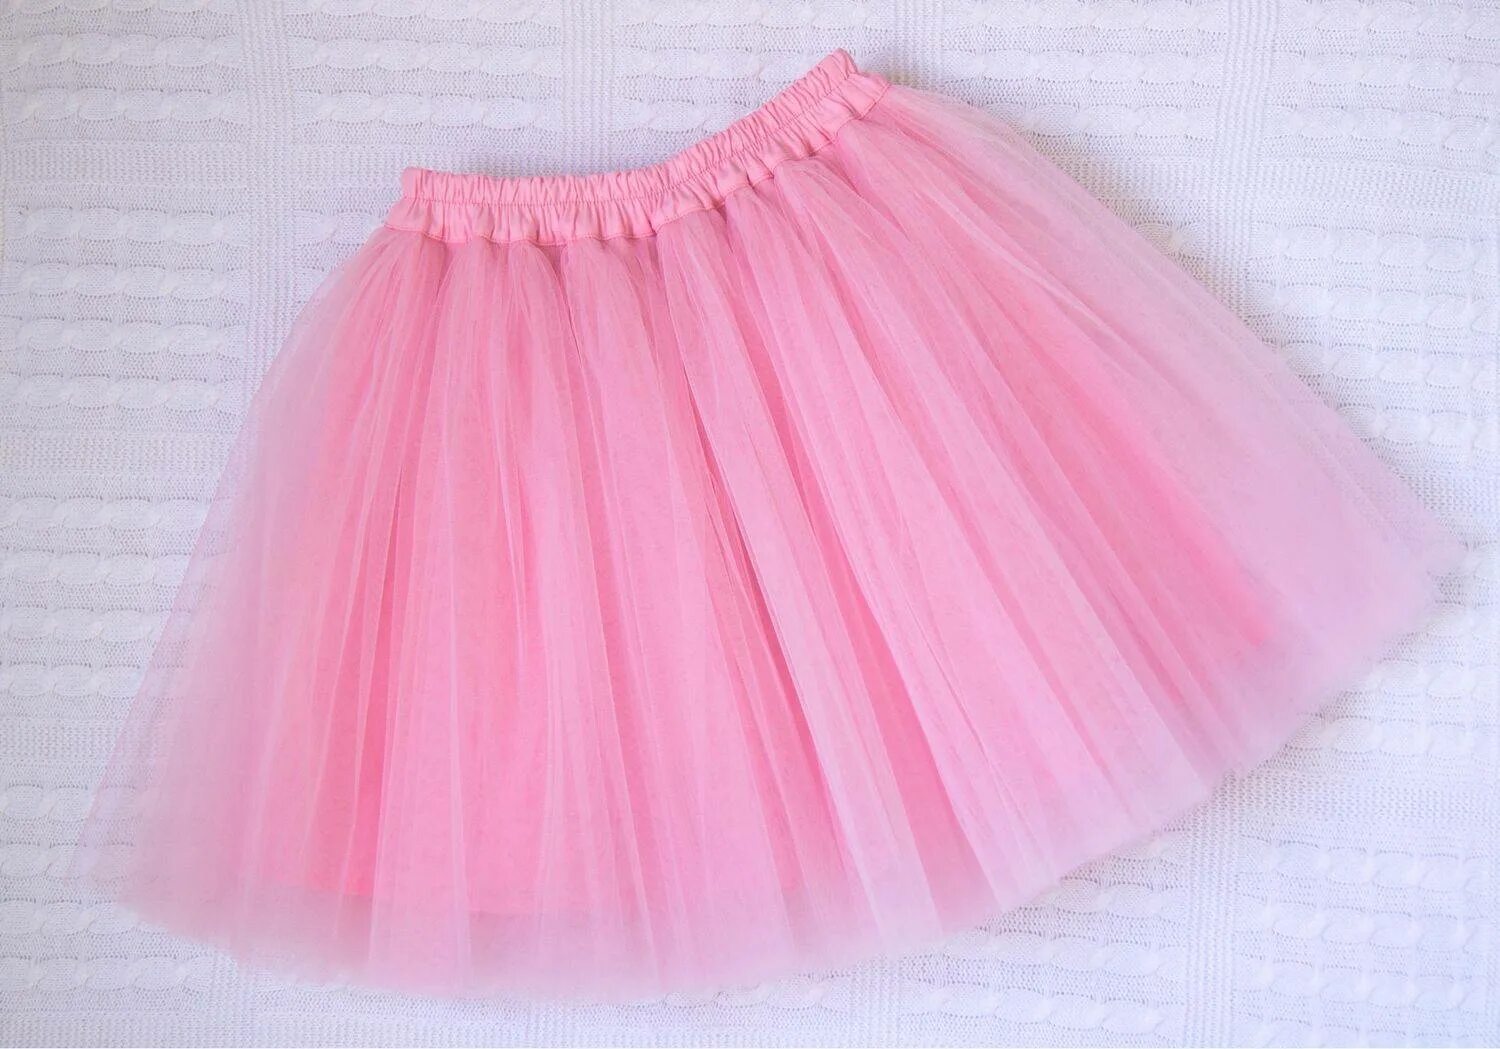 Сколько фатина на юбку. Юбка пачка. Фатиновая юбка для девочки. Юбка с фатином для девочки. Розовая юбка для девочки.